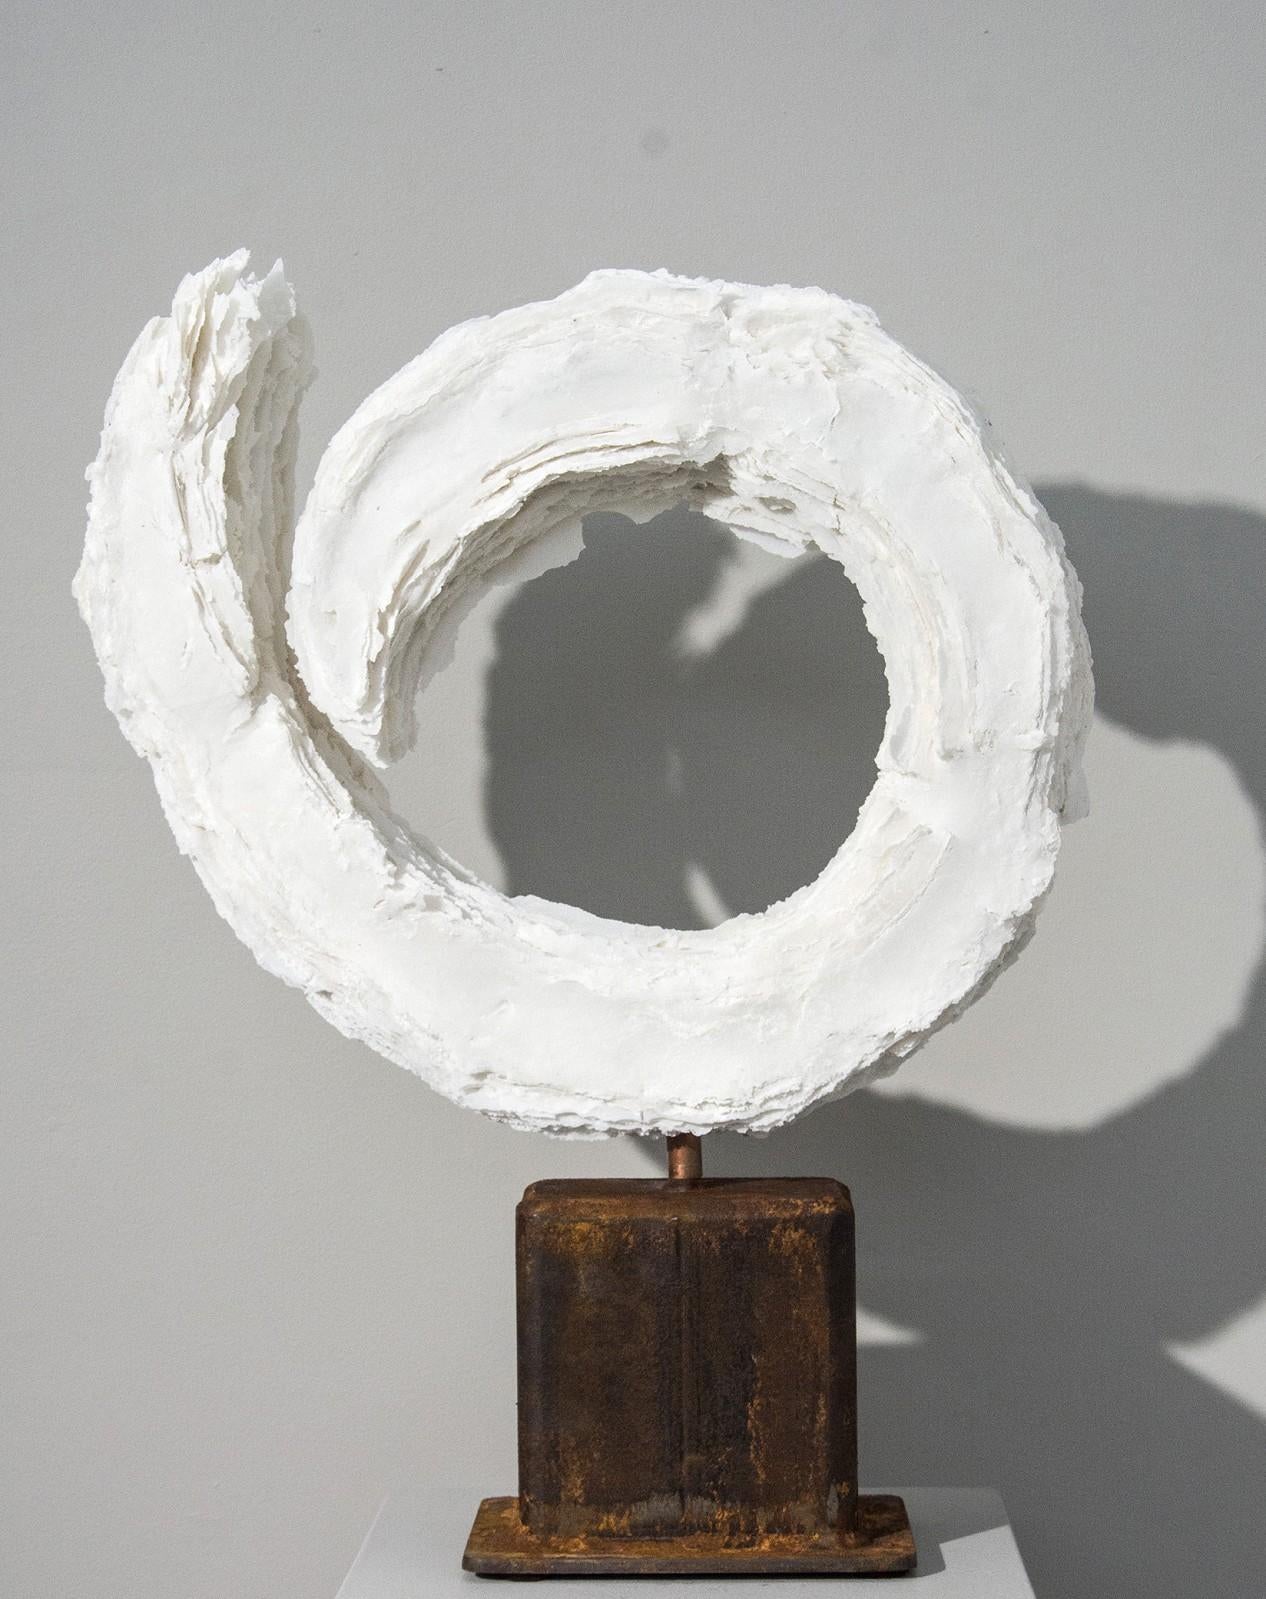 Cheryl Wilson Smith Abstract Sculpture - Flourish II - white, textured, abstract, modernist, layered glass frit sculpture